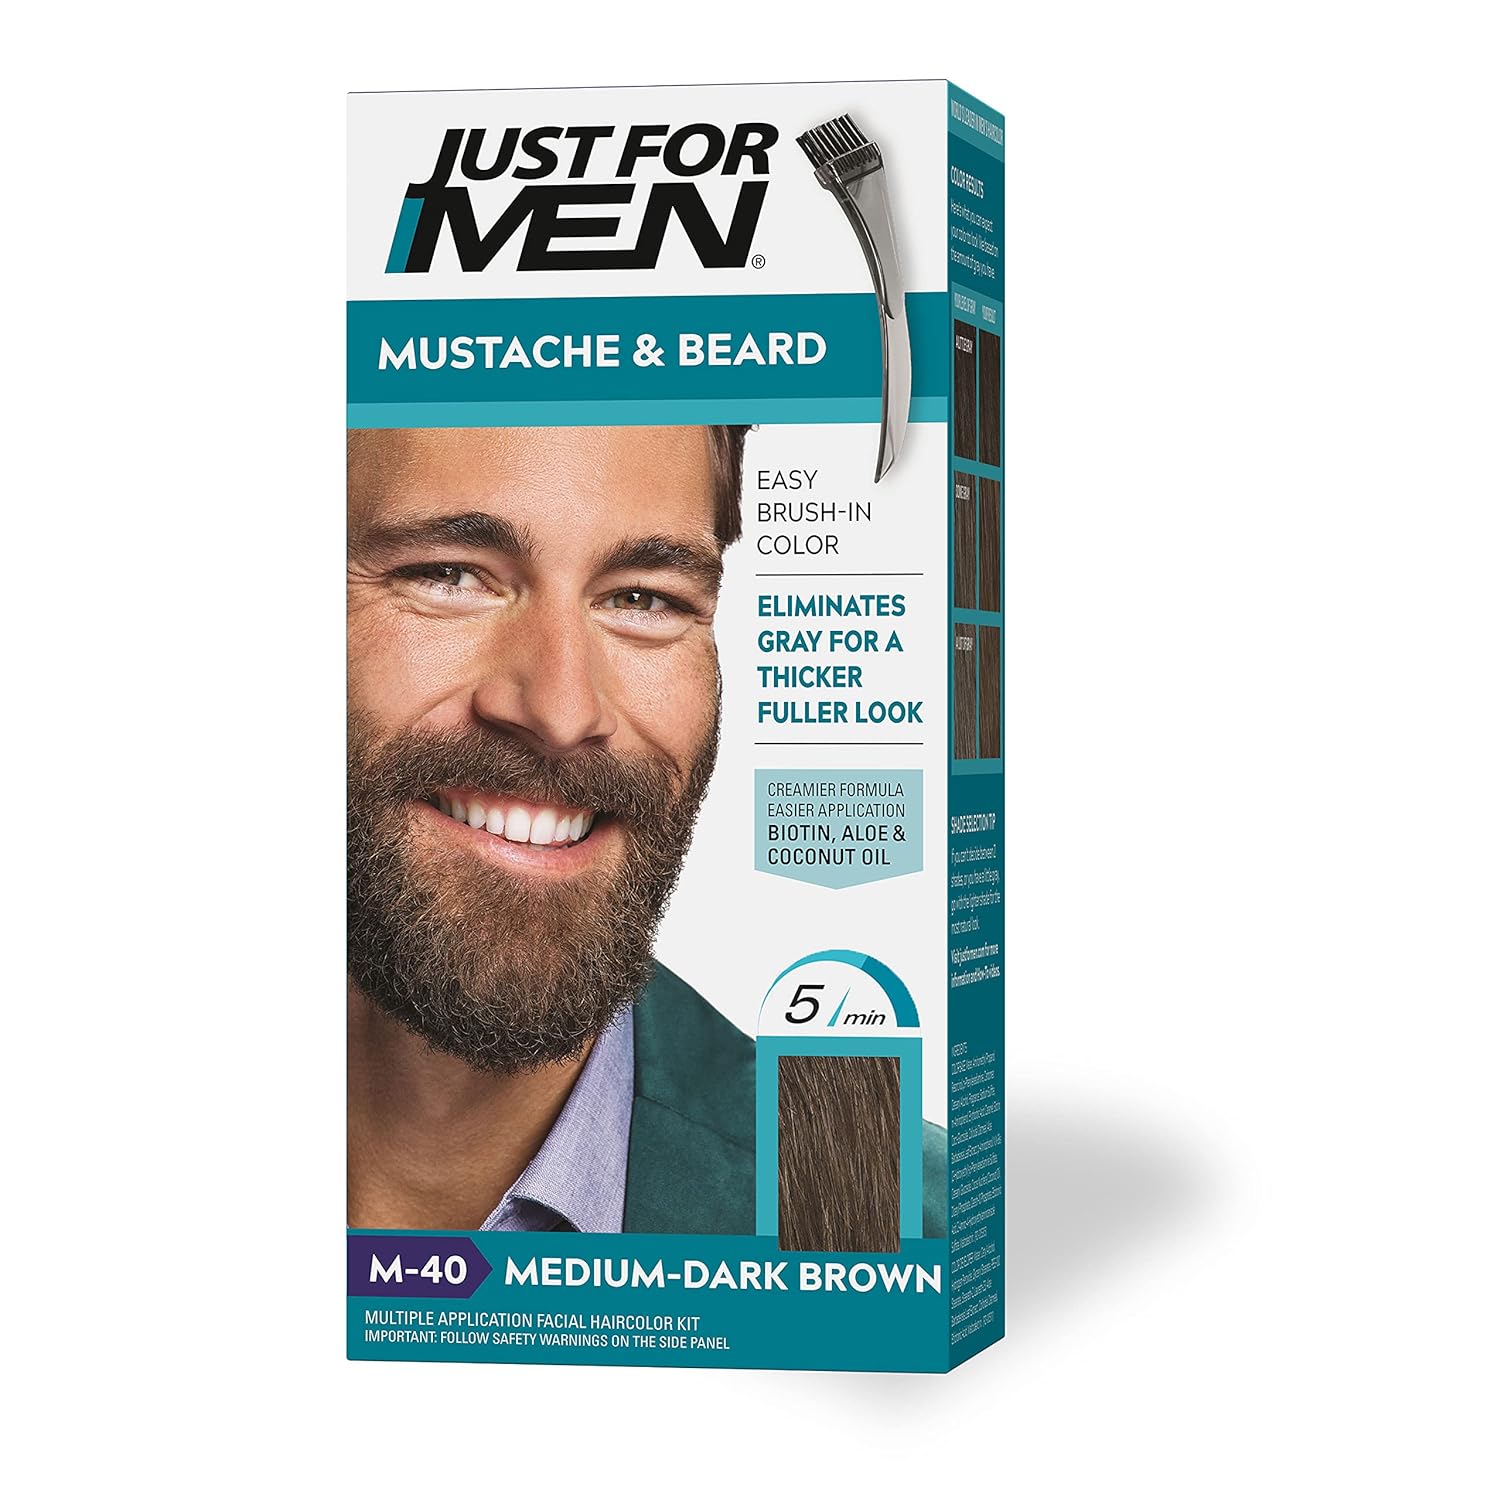 Just For Men Mustache & Beard Coloring for Gray Hair, M40 Medium Dark Brown - image 1 of 8